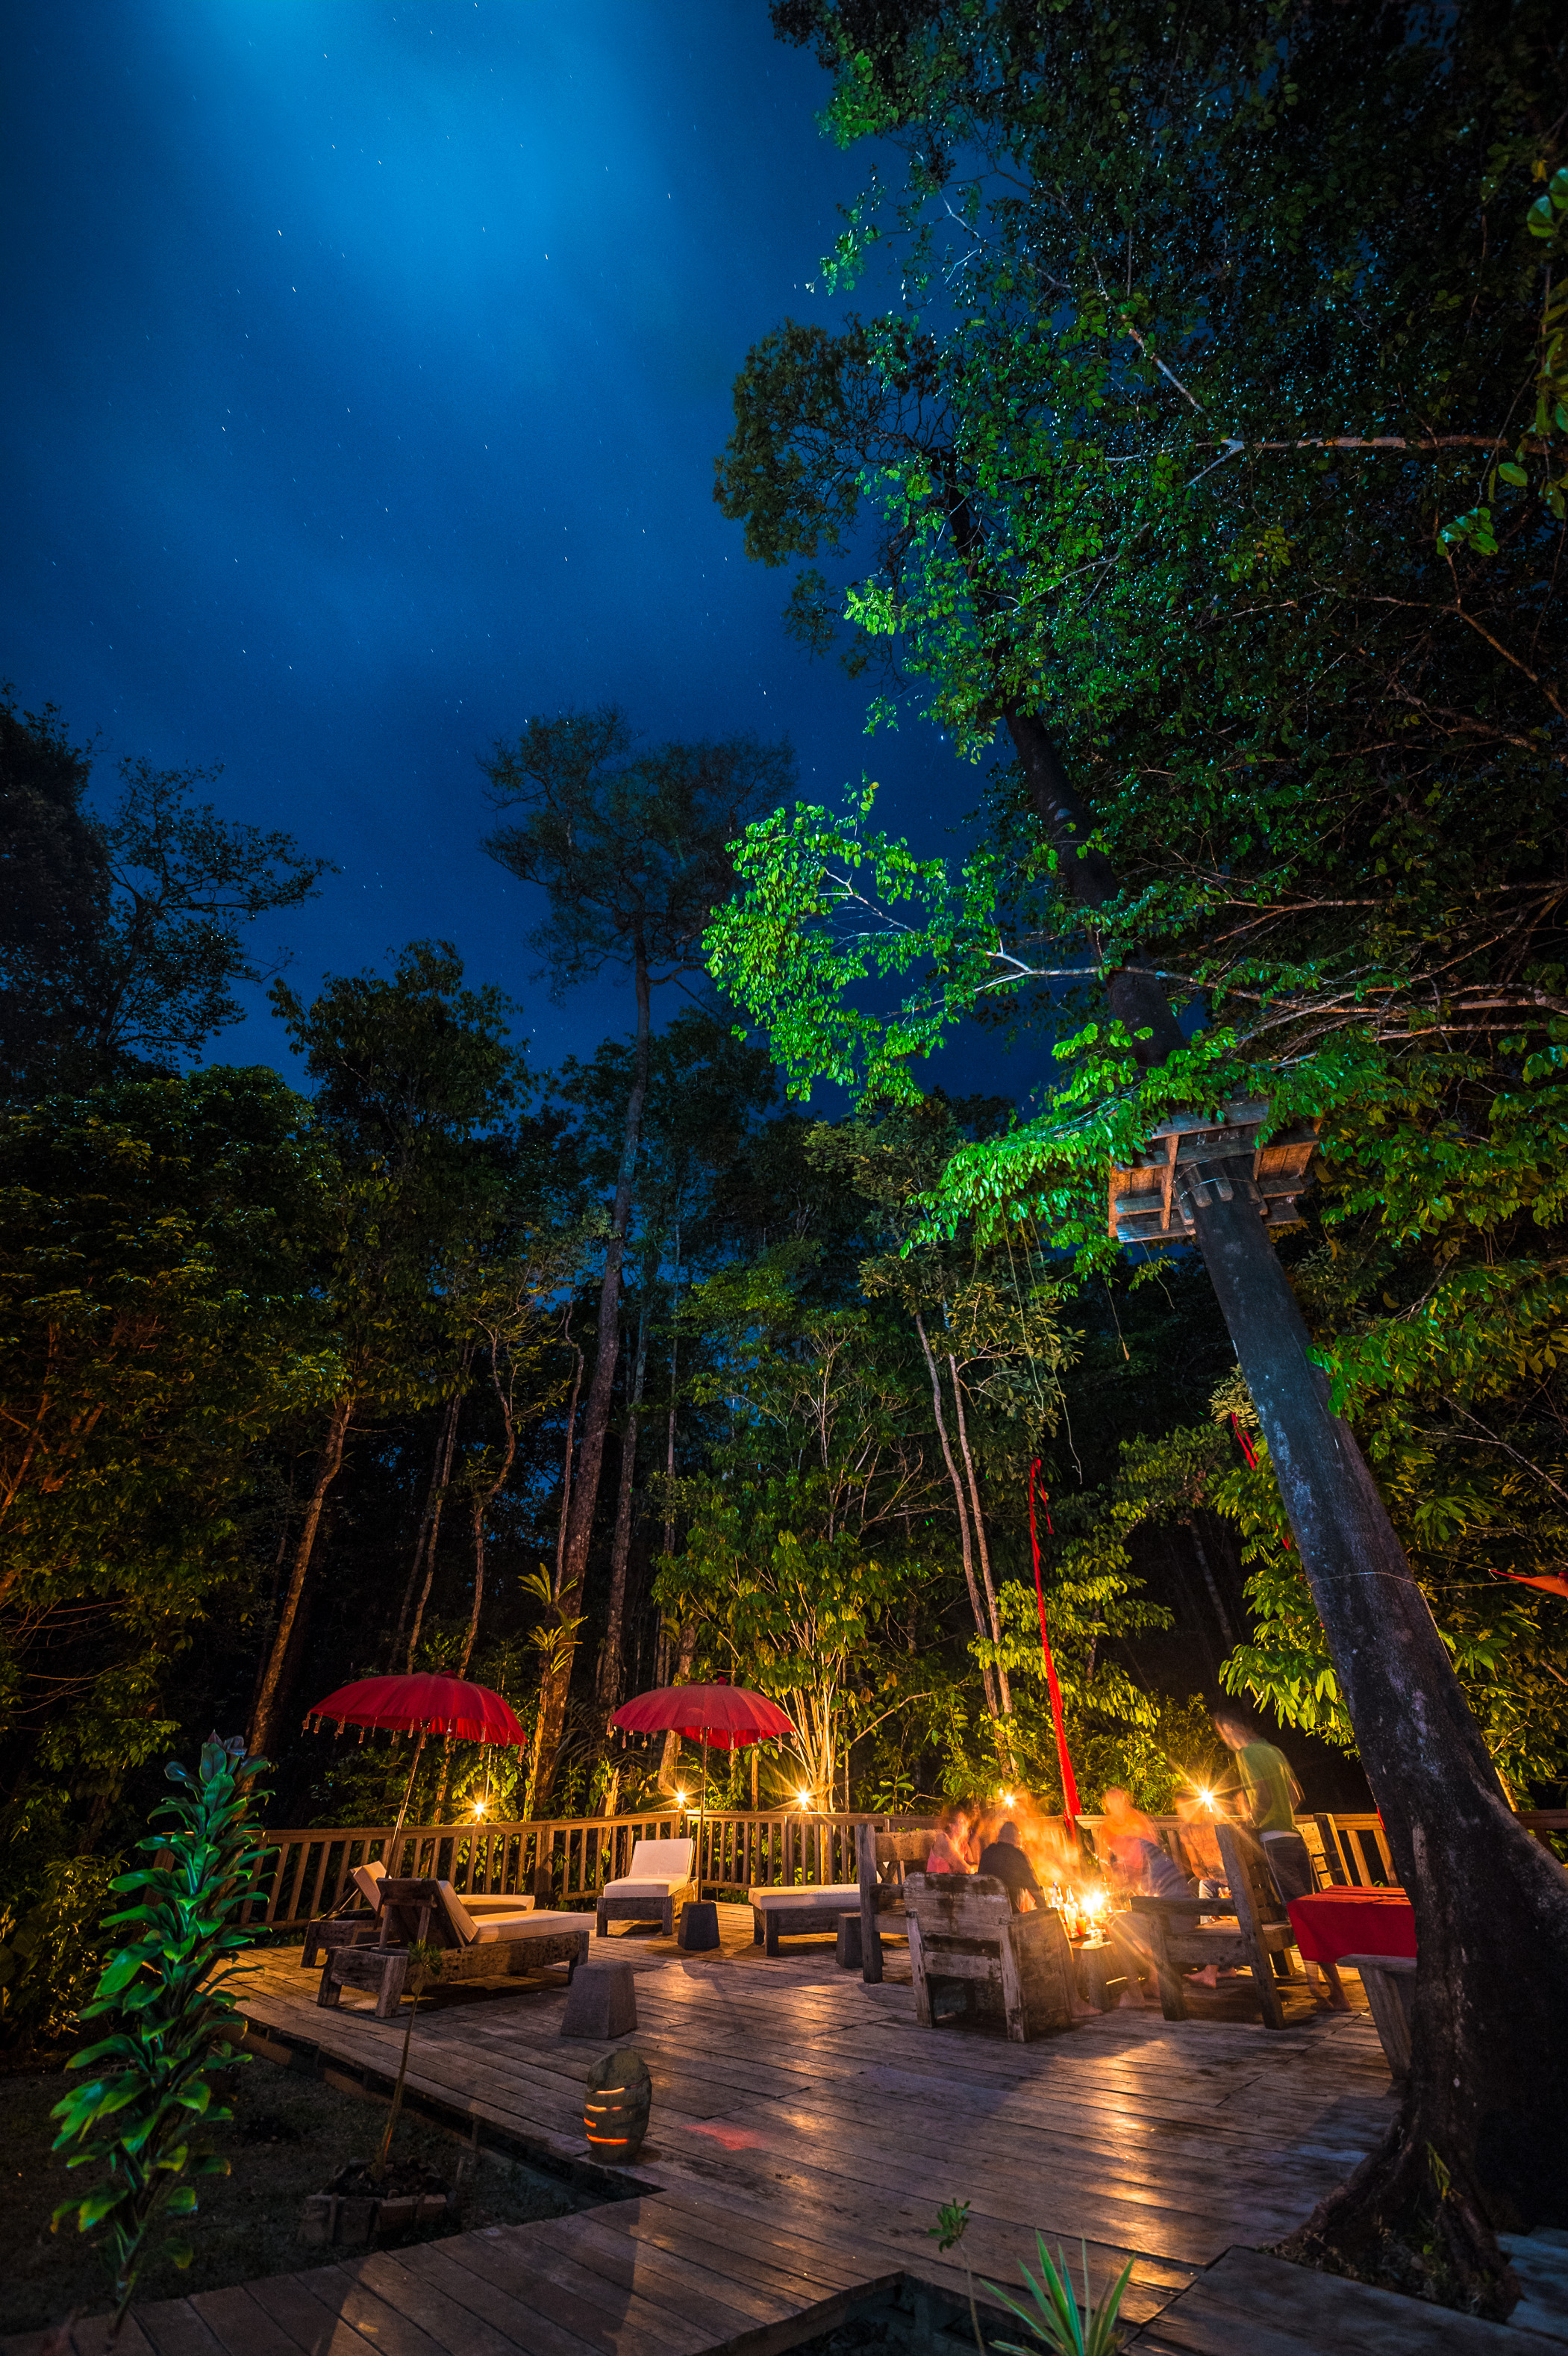 France, Guyane, Kourou, Ponton-terrasse du Wapa Lodge, vu de nuit // France, French Guiana, Kourou, Pontoon-terrace of Wapa Lodge by night